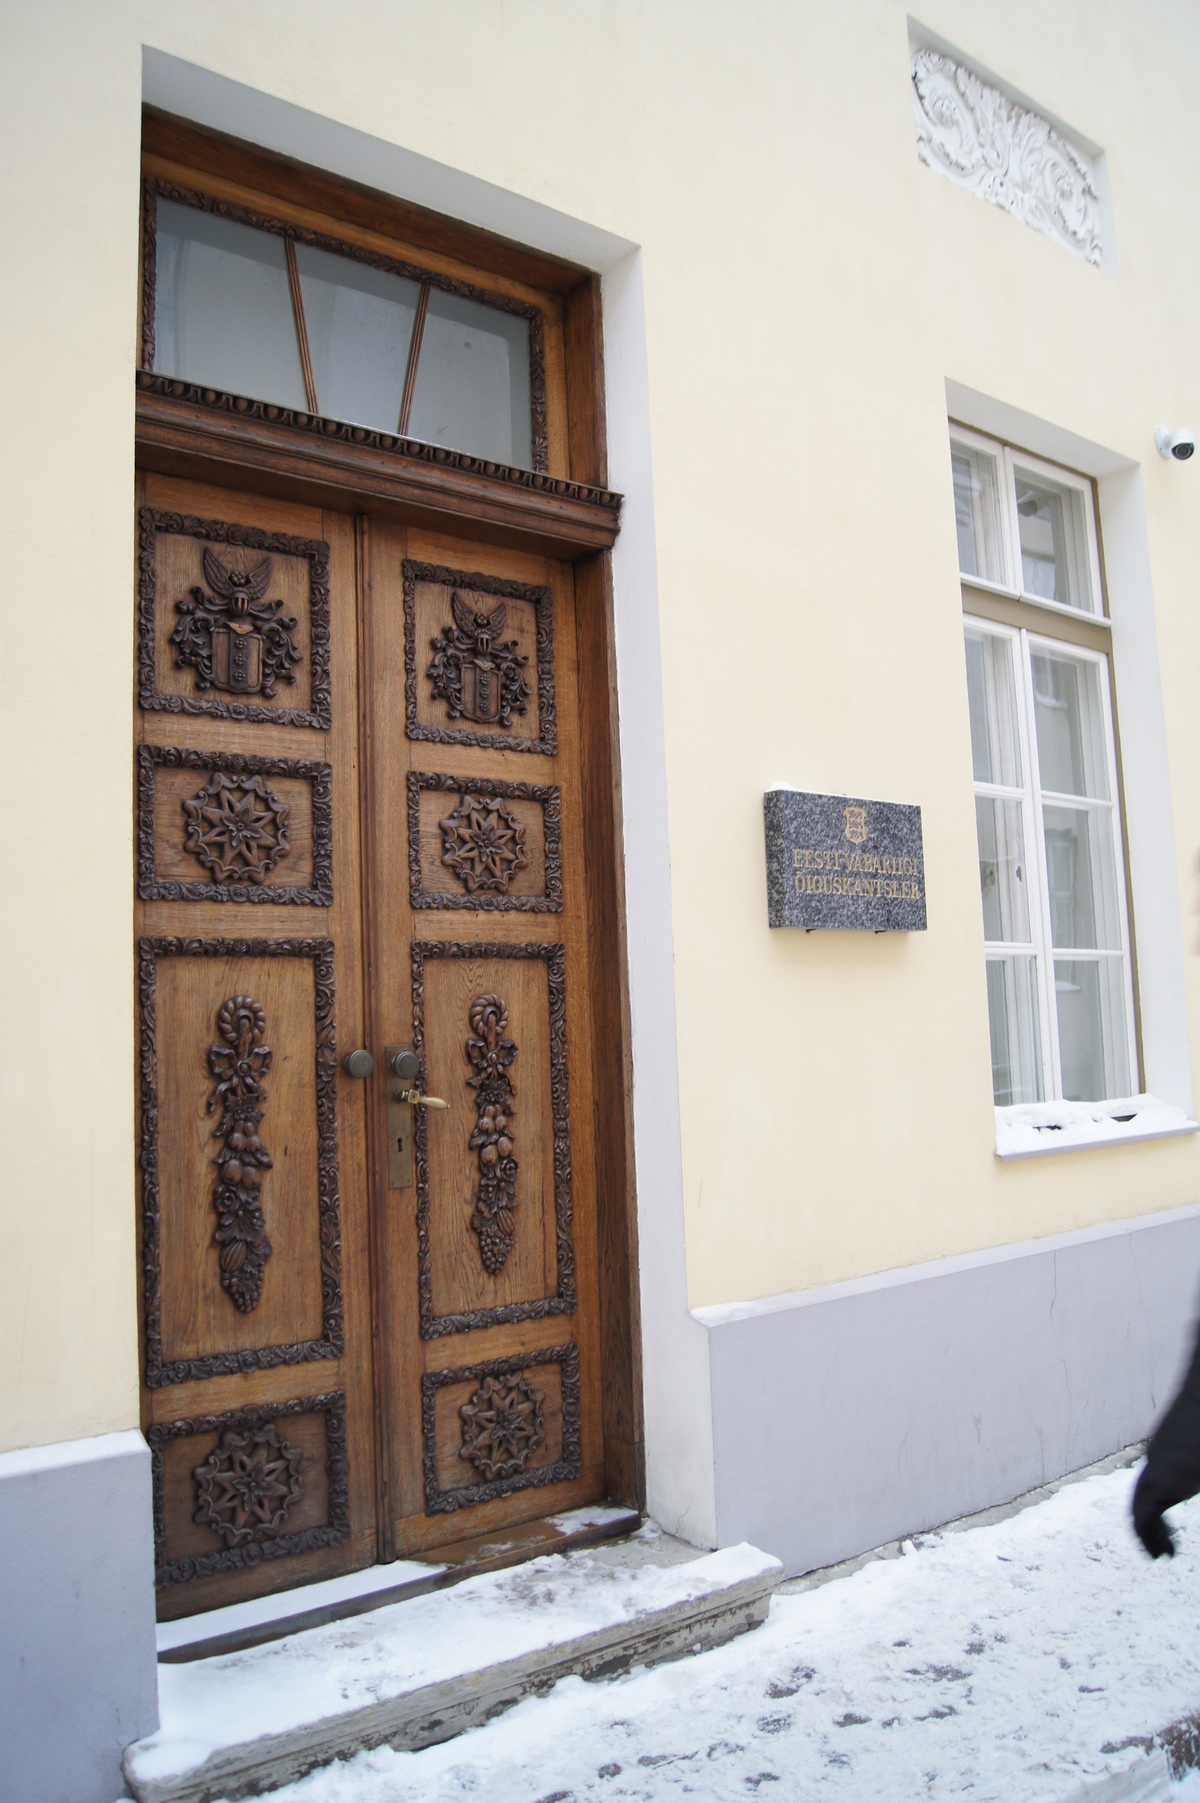 The door. Walking in Tallinn.